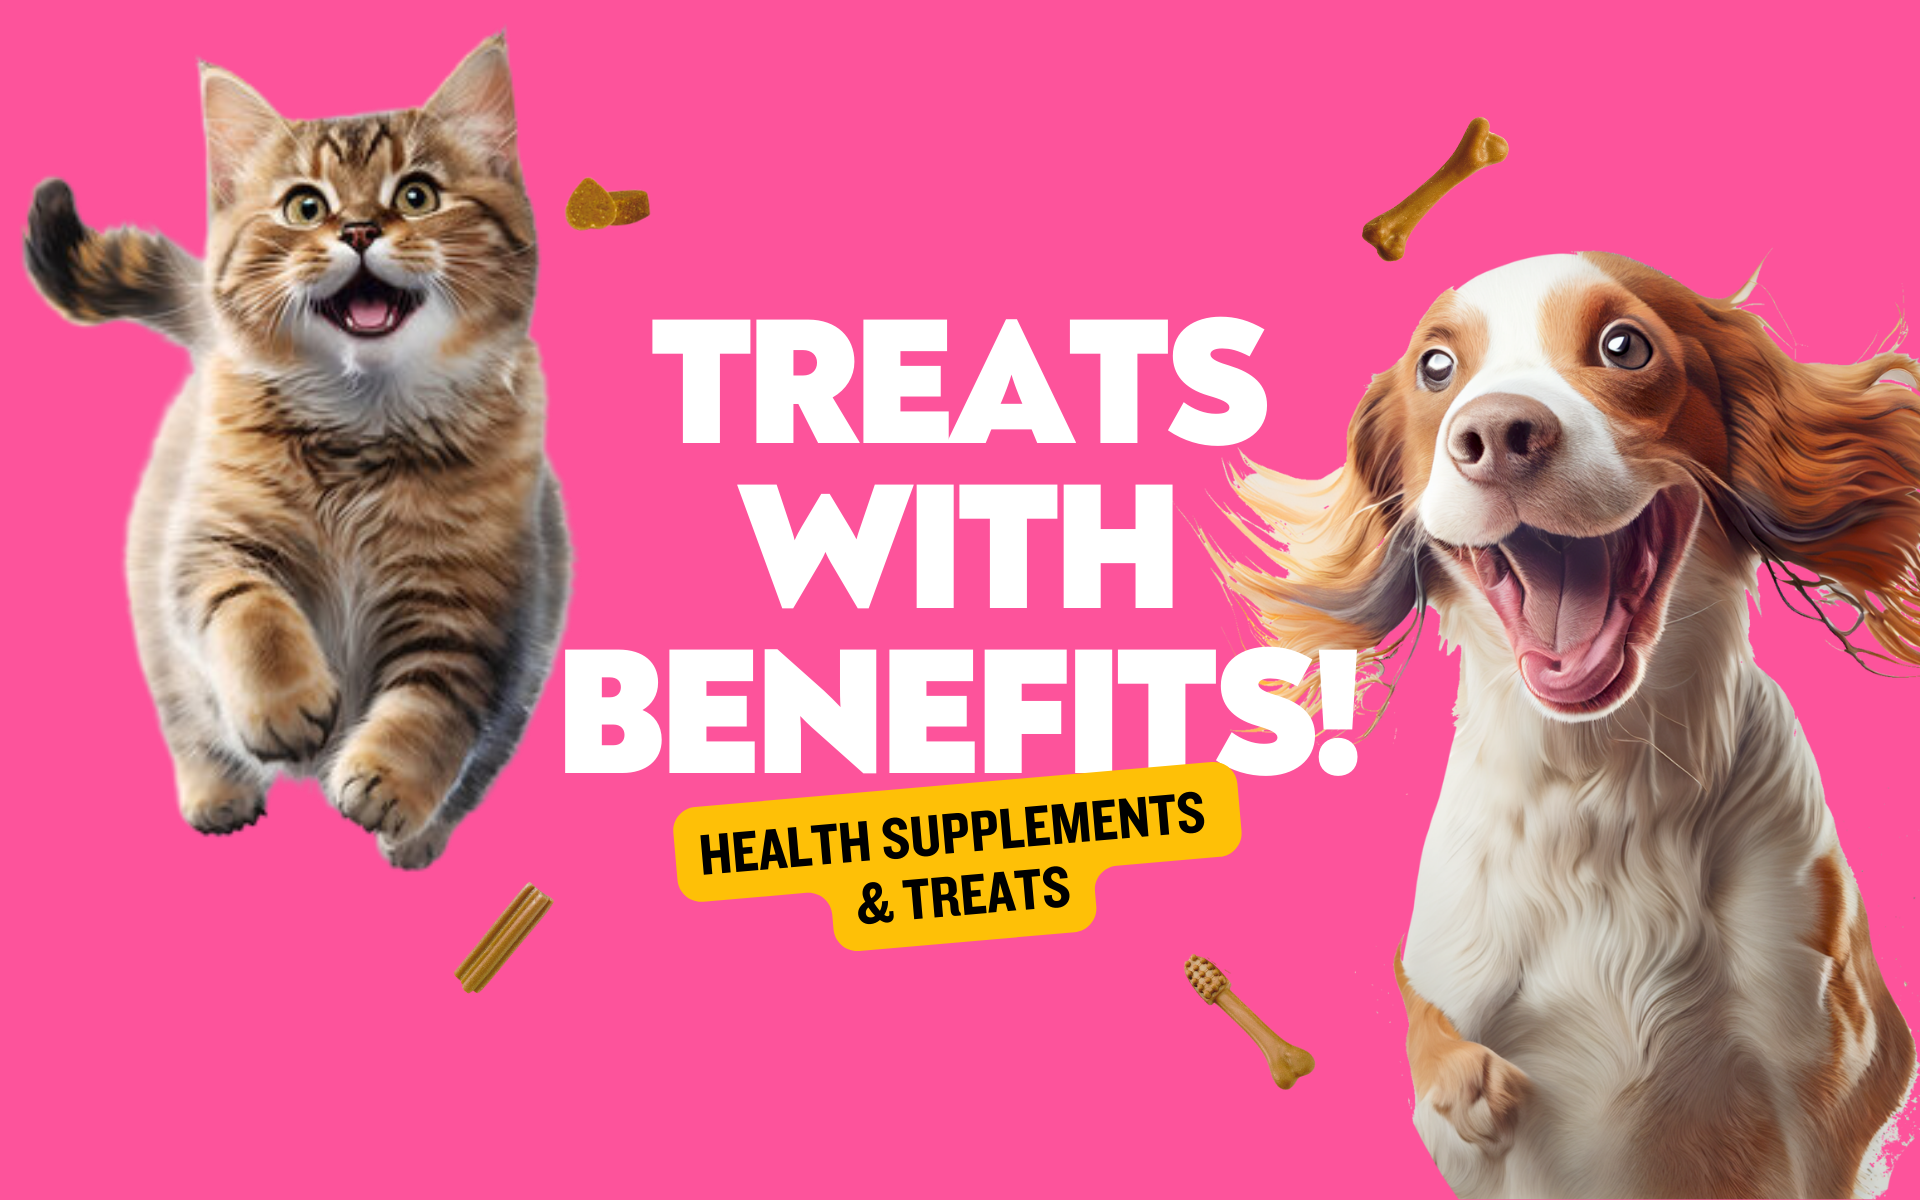 Treats with Benefits - Health Supplements & Treats